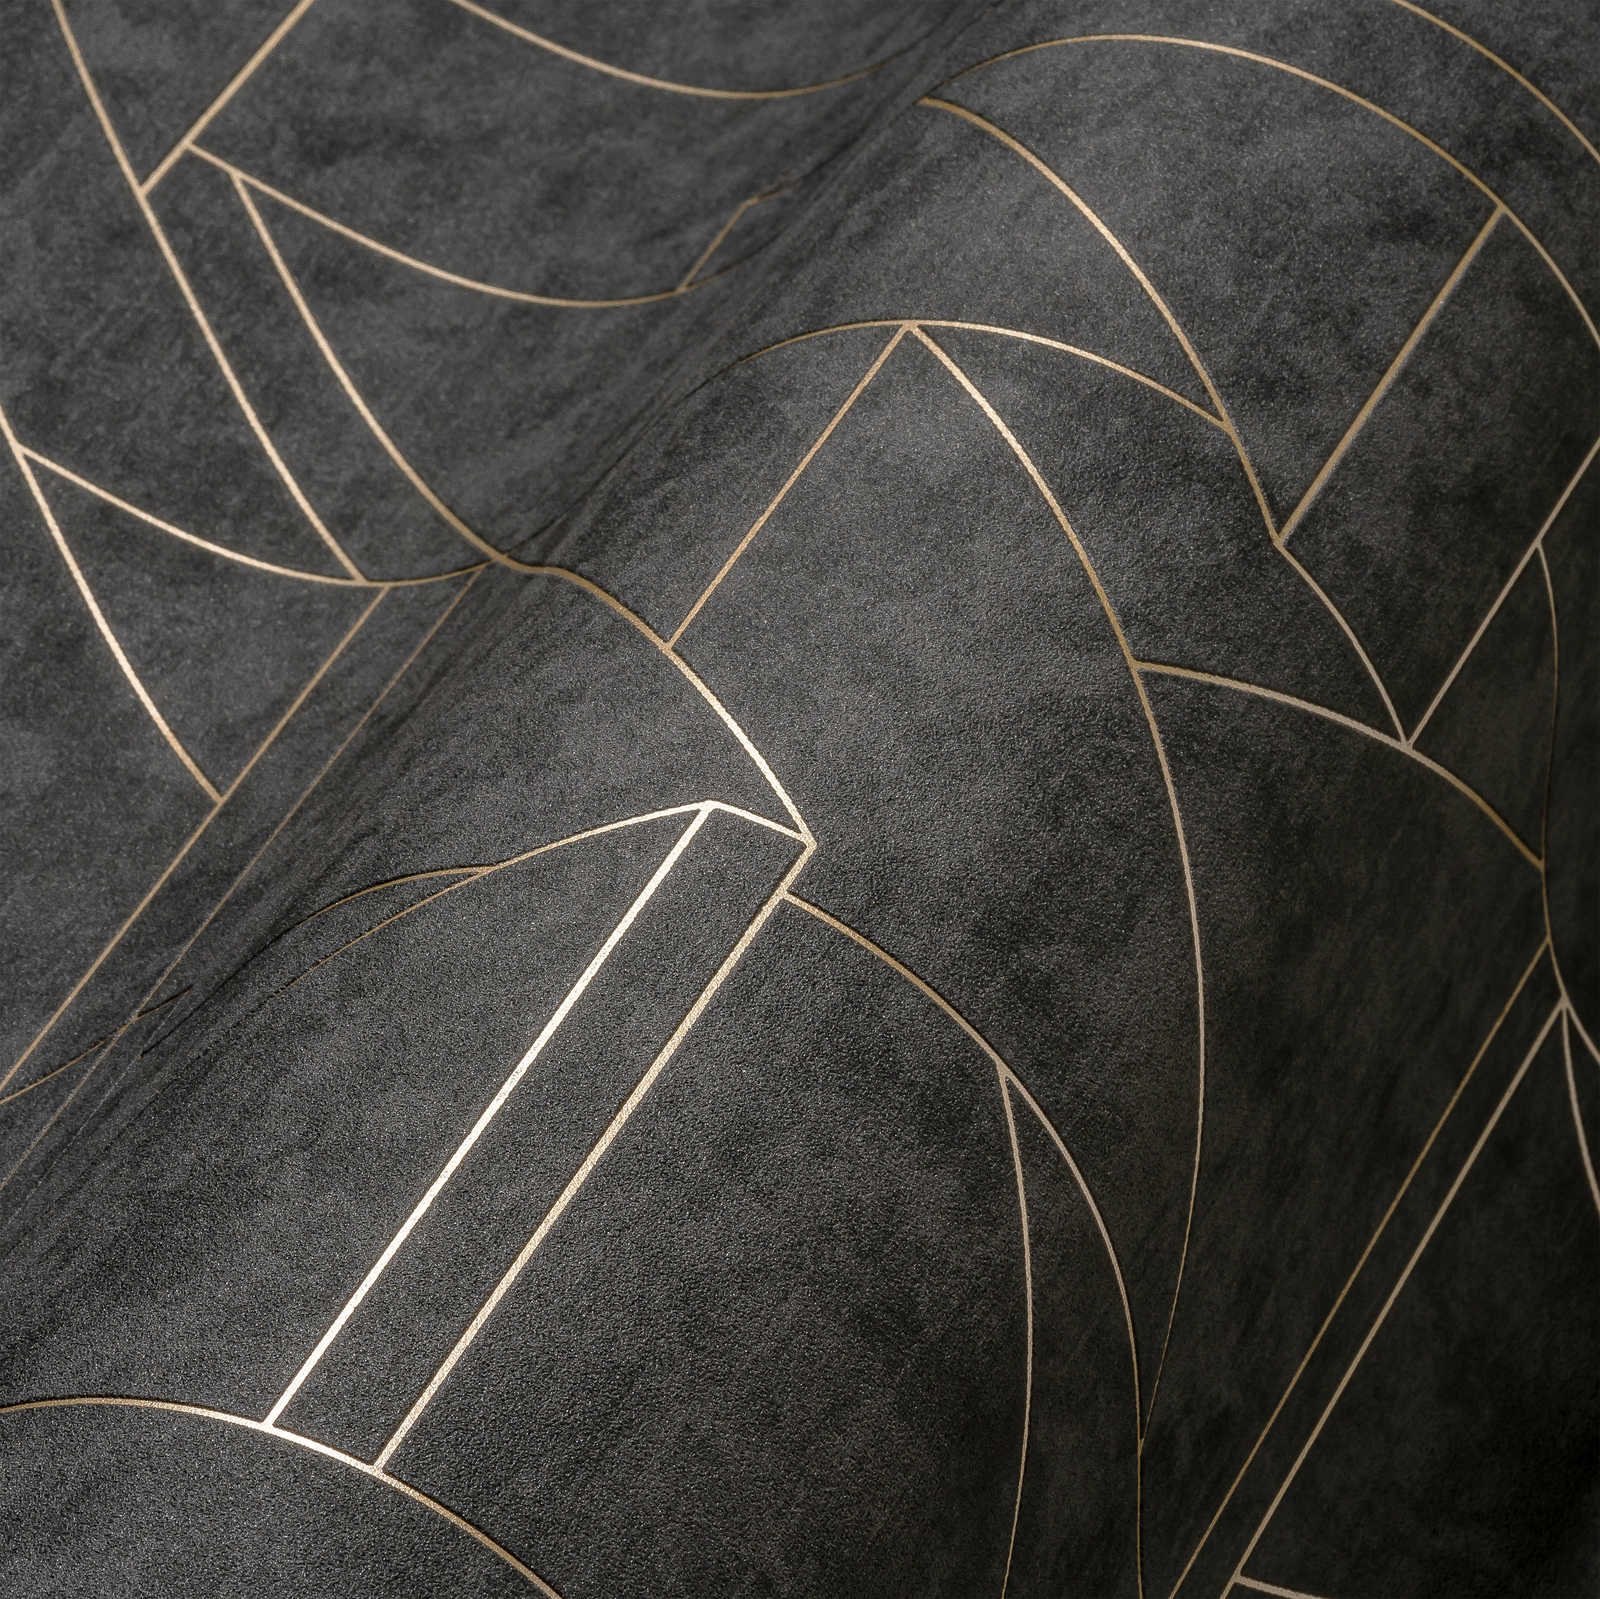             Papel pintado no tejido con discreto motivo de líneas - negro, dorado
        